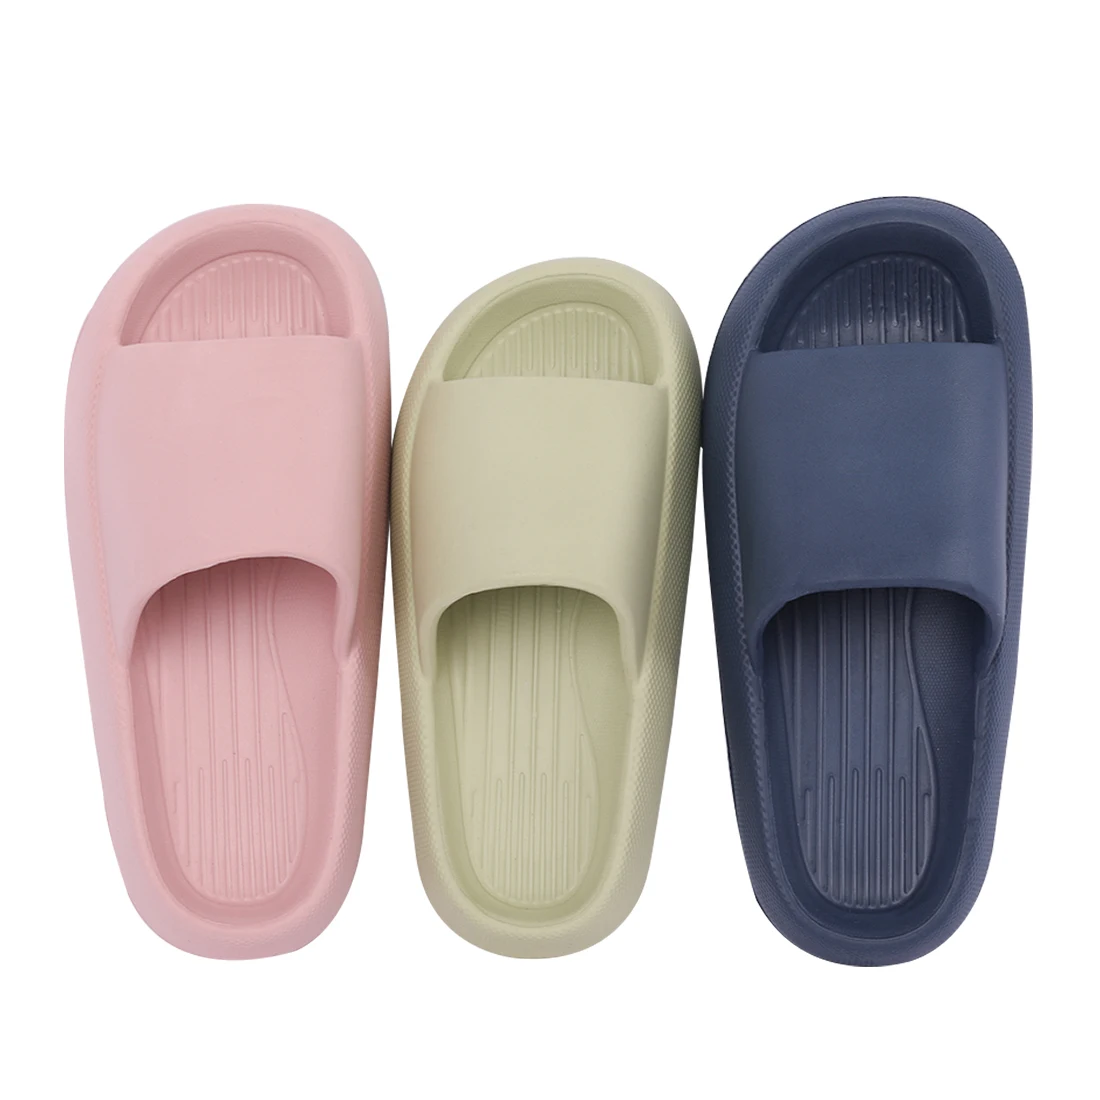 Wholesale  Women's Platform Sandals Comfort Wear-resistant Slippers Soft Shower Bathroom Women Summer Slippers  home Slippers